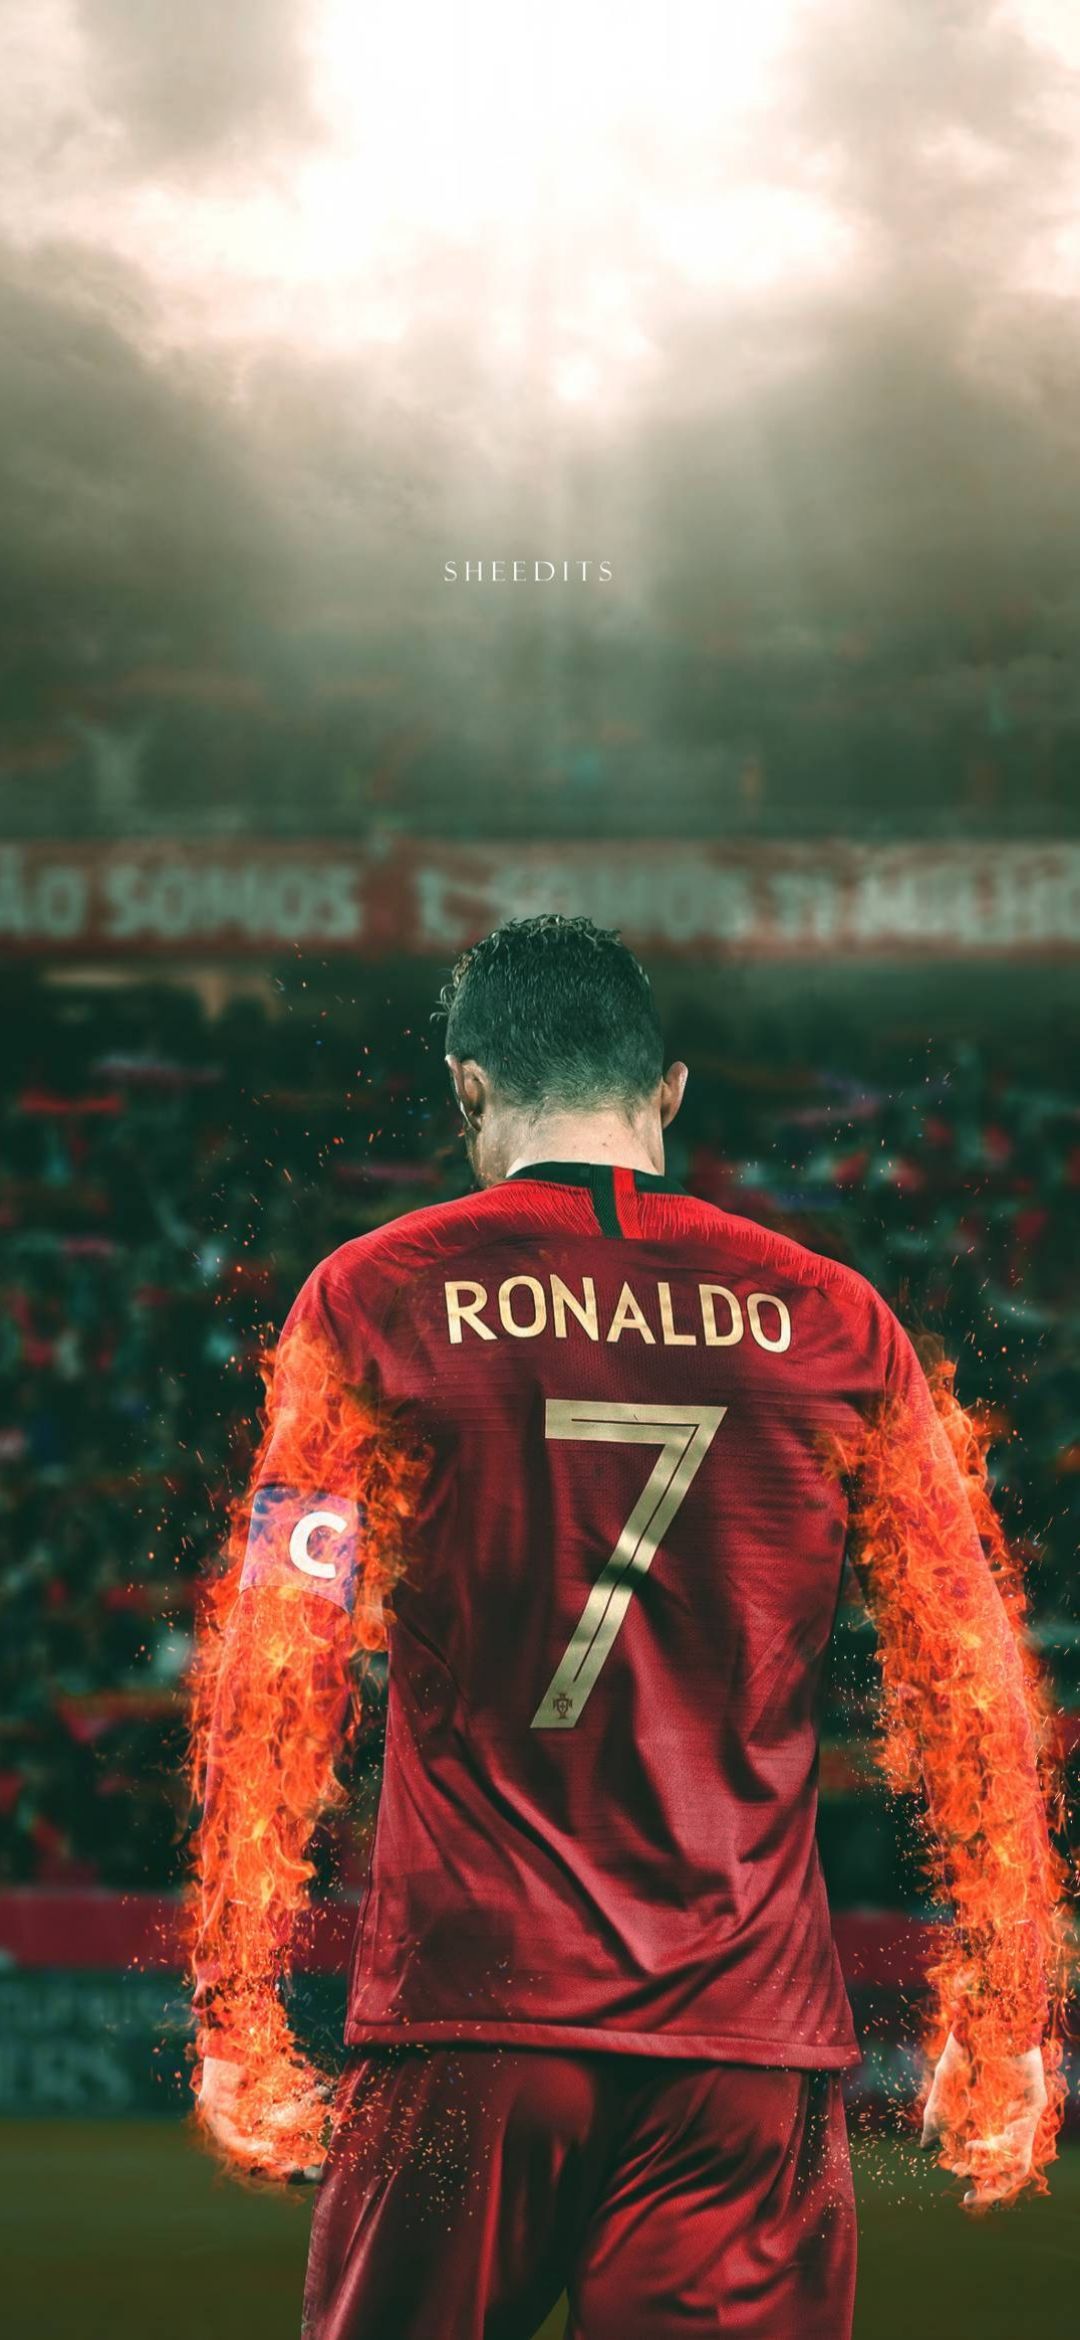 Ronaldo iPhone Wallpapers  Top Free Ronaldo iPhone Backgrounds   WallpaperAccess